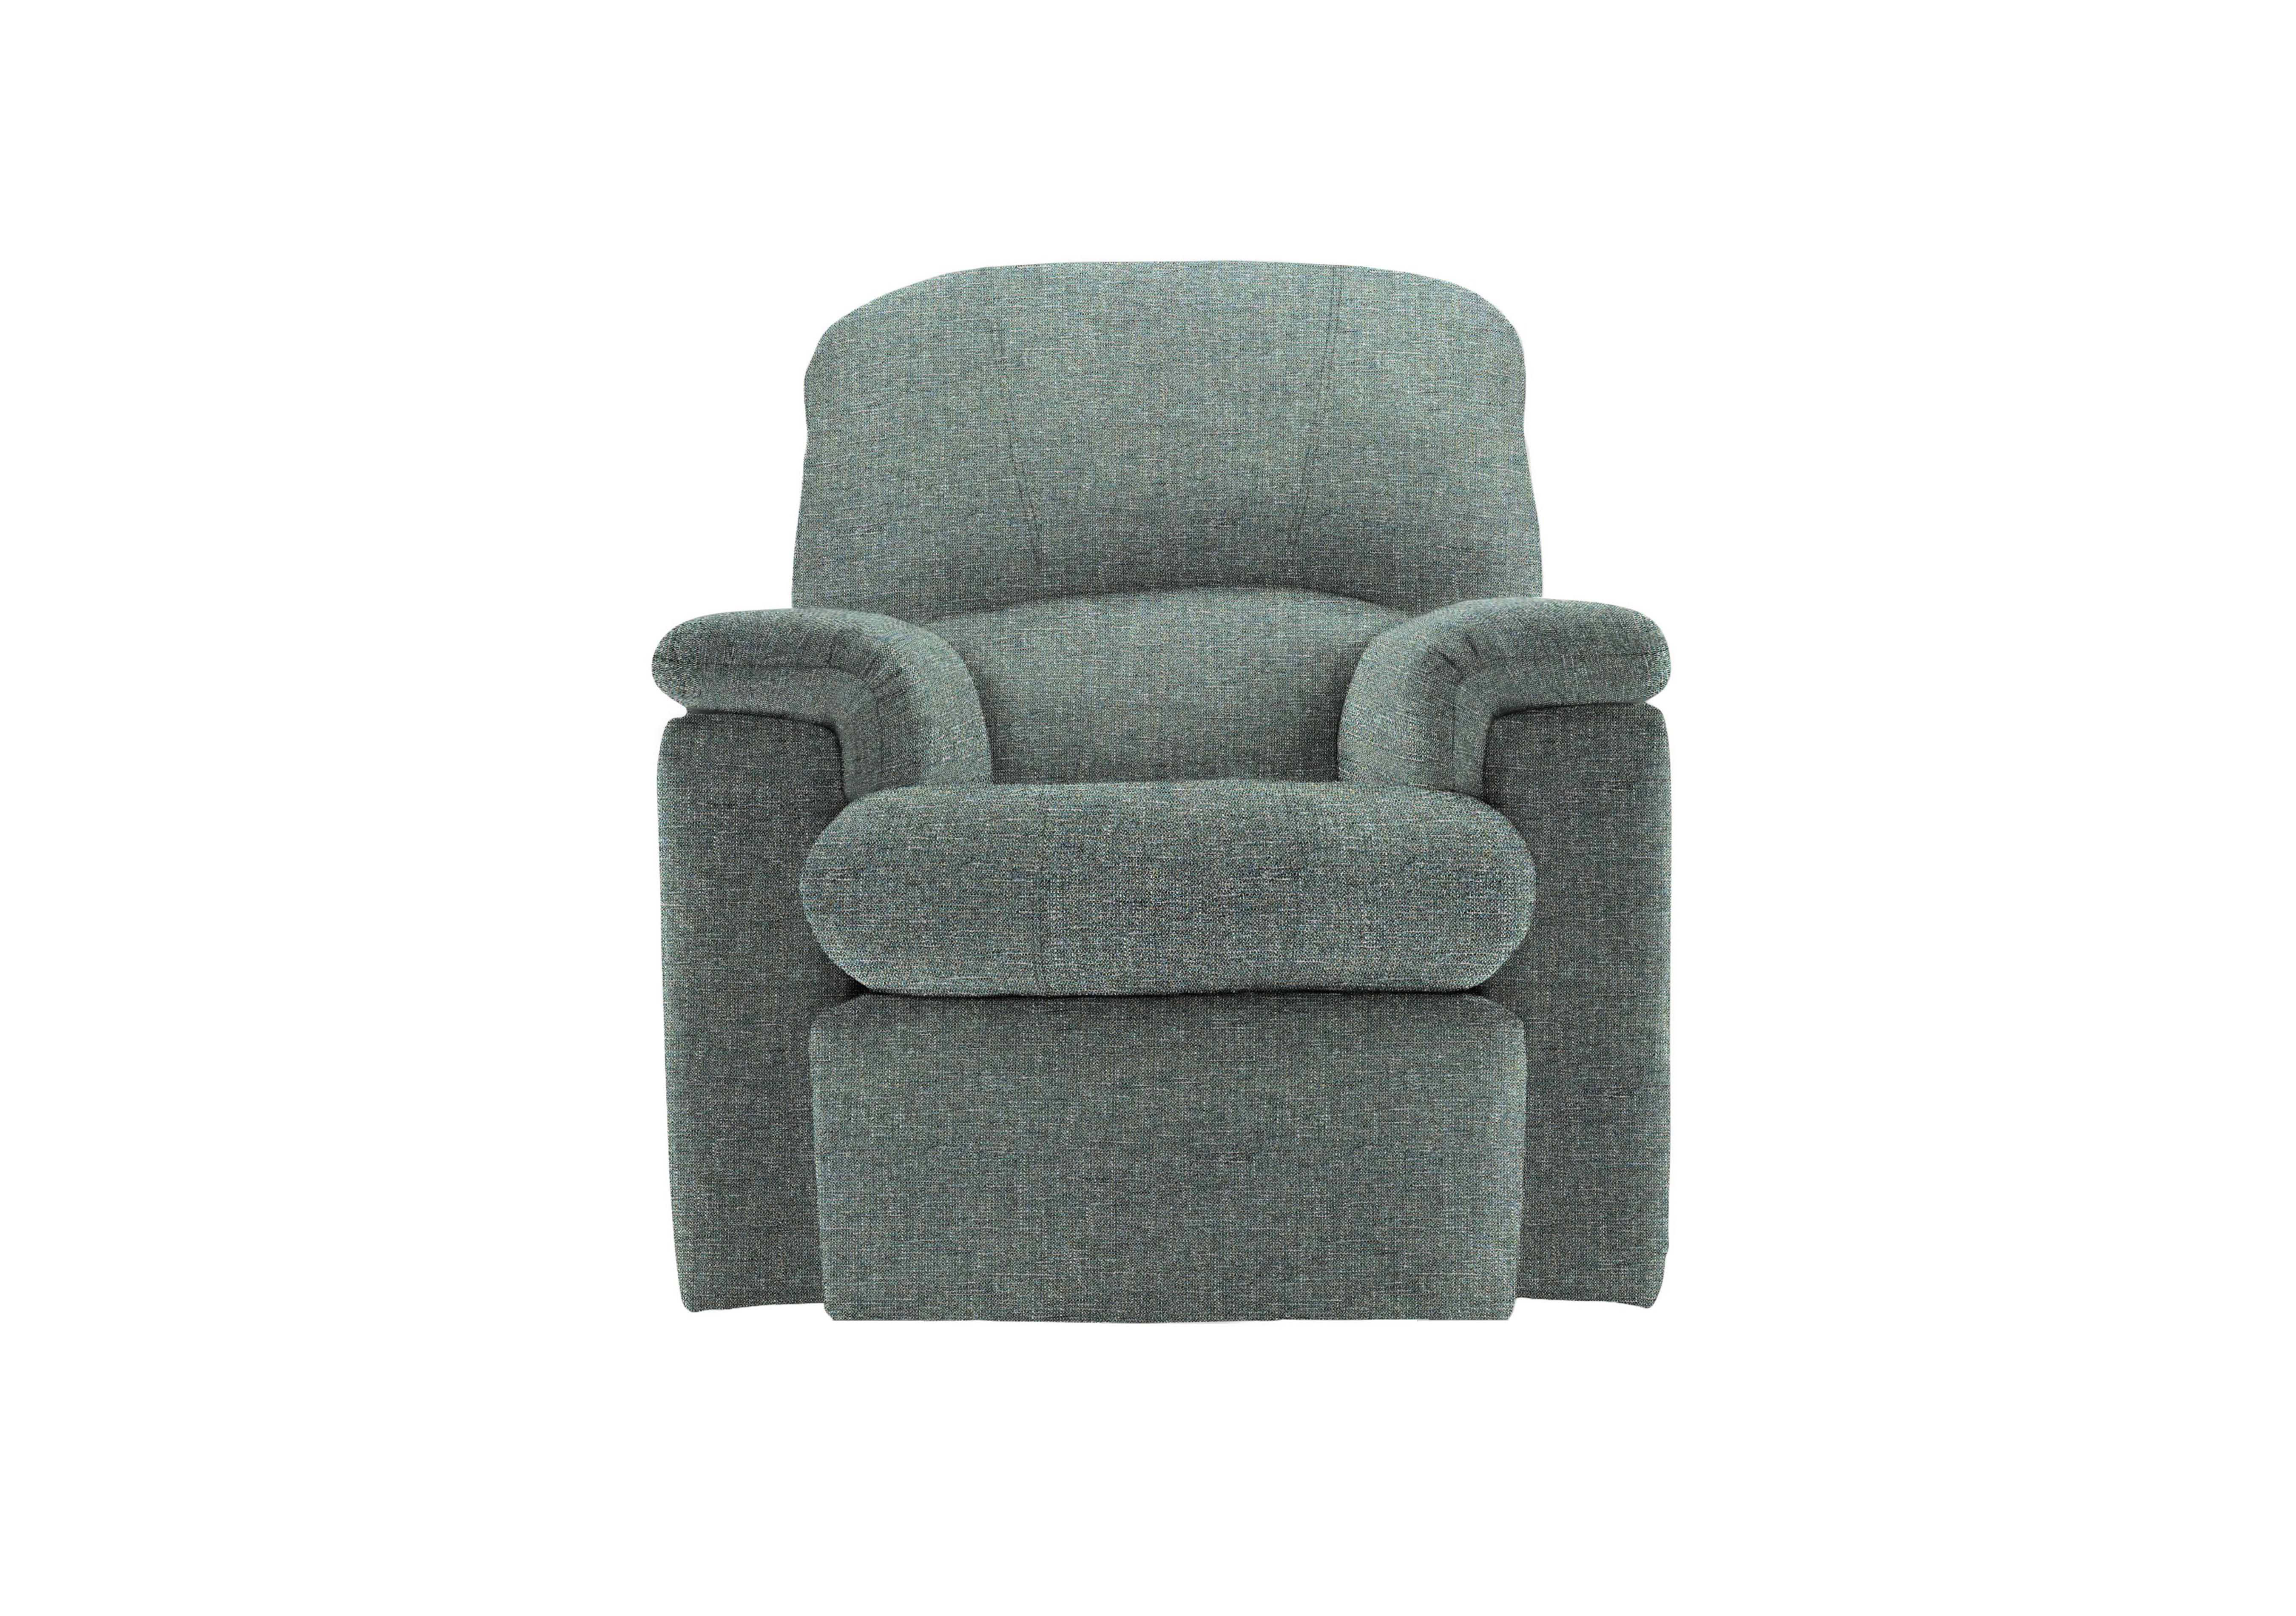 Chloe Small Fabric Armchair in A020 Dapple Kingfisher on Furniture Village